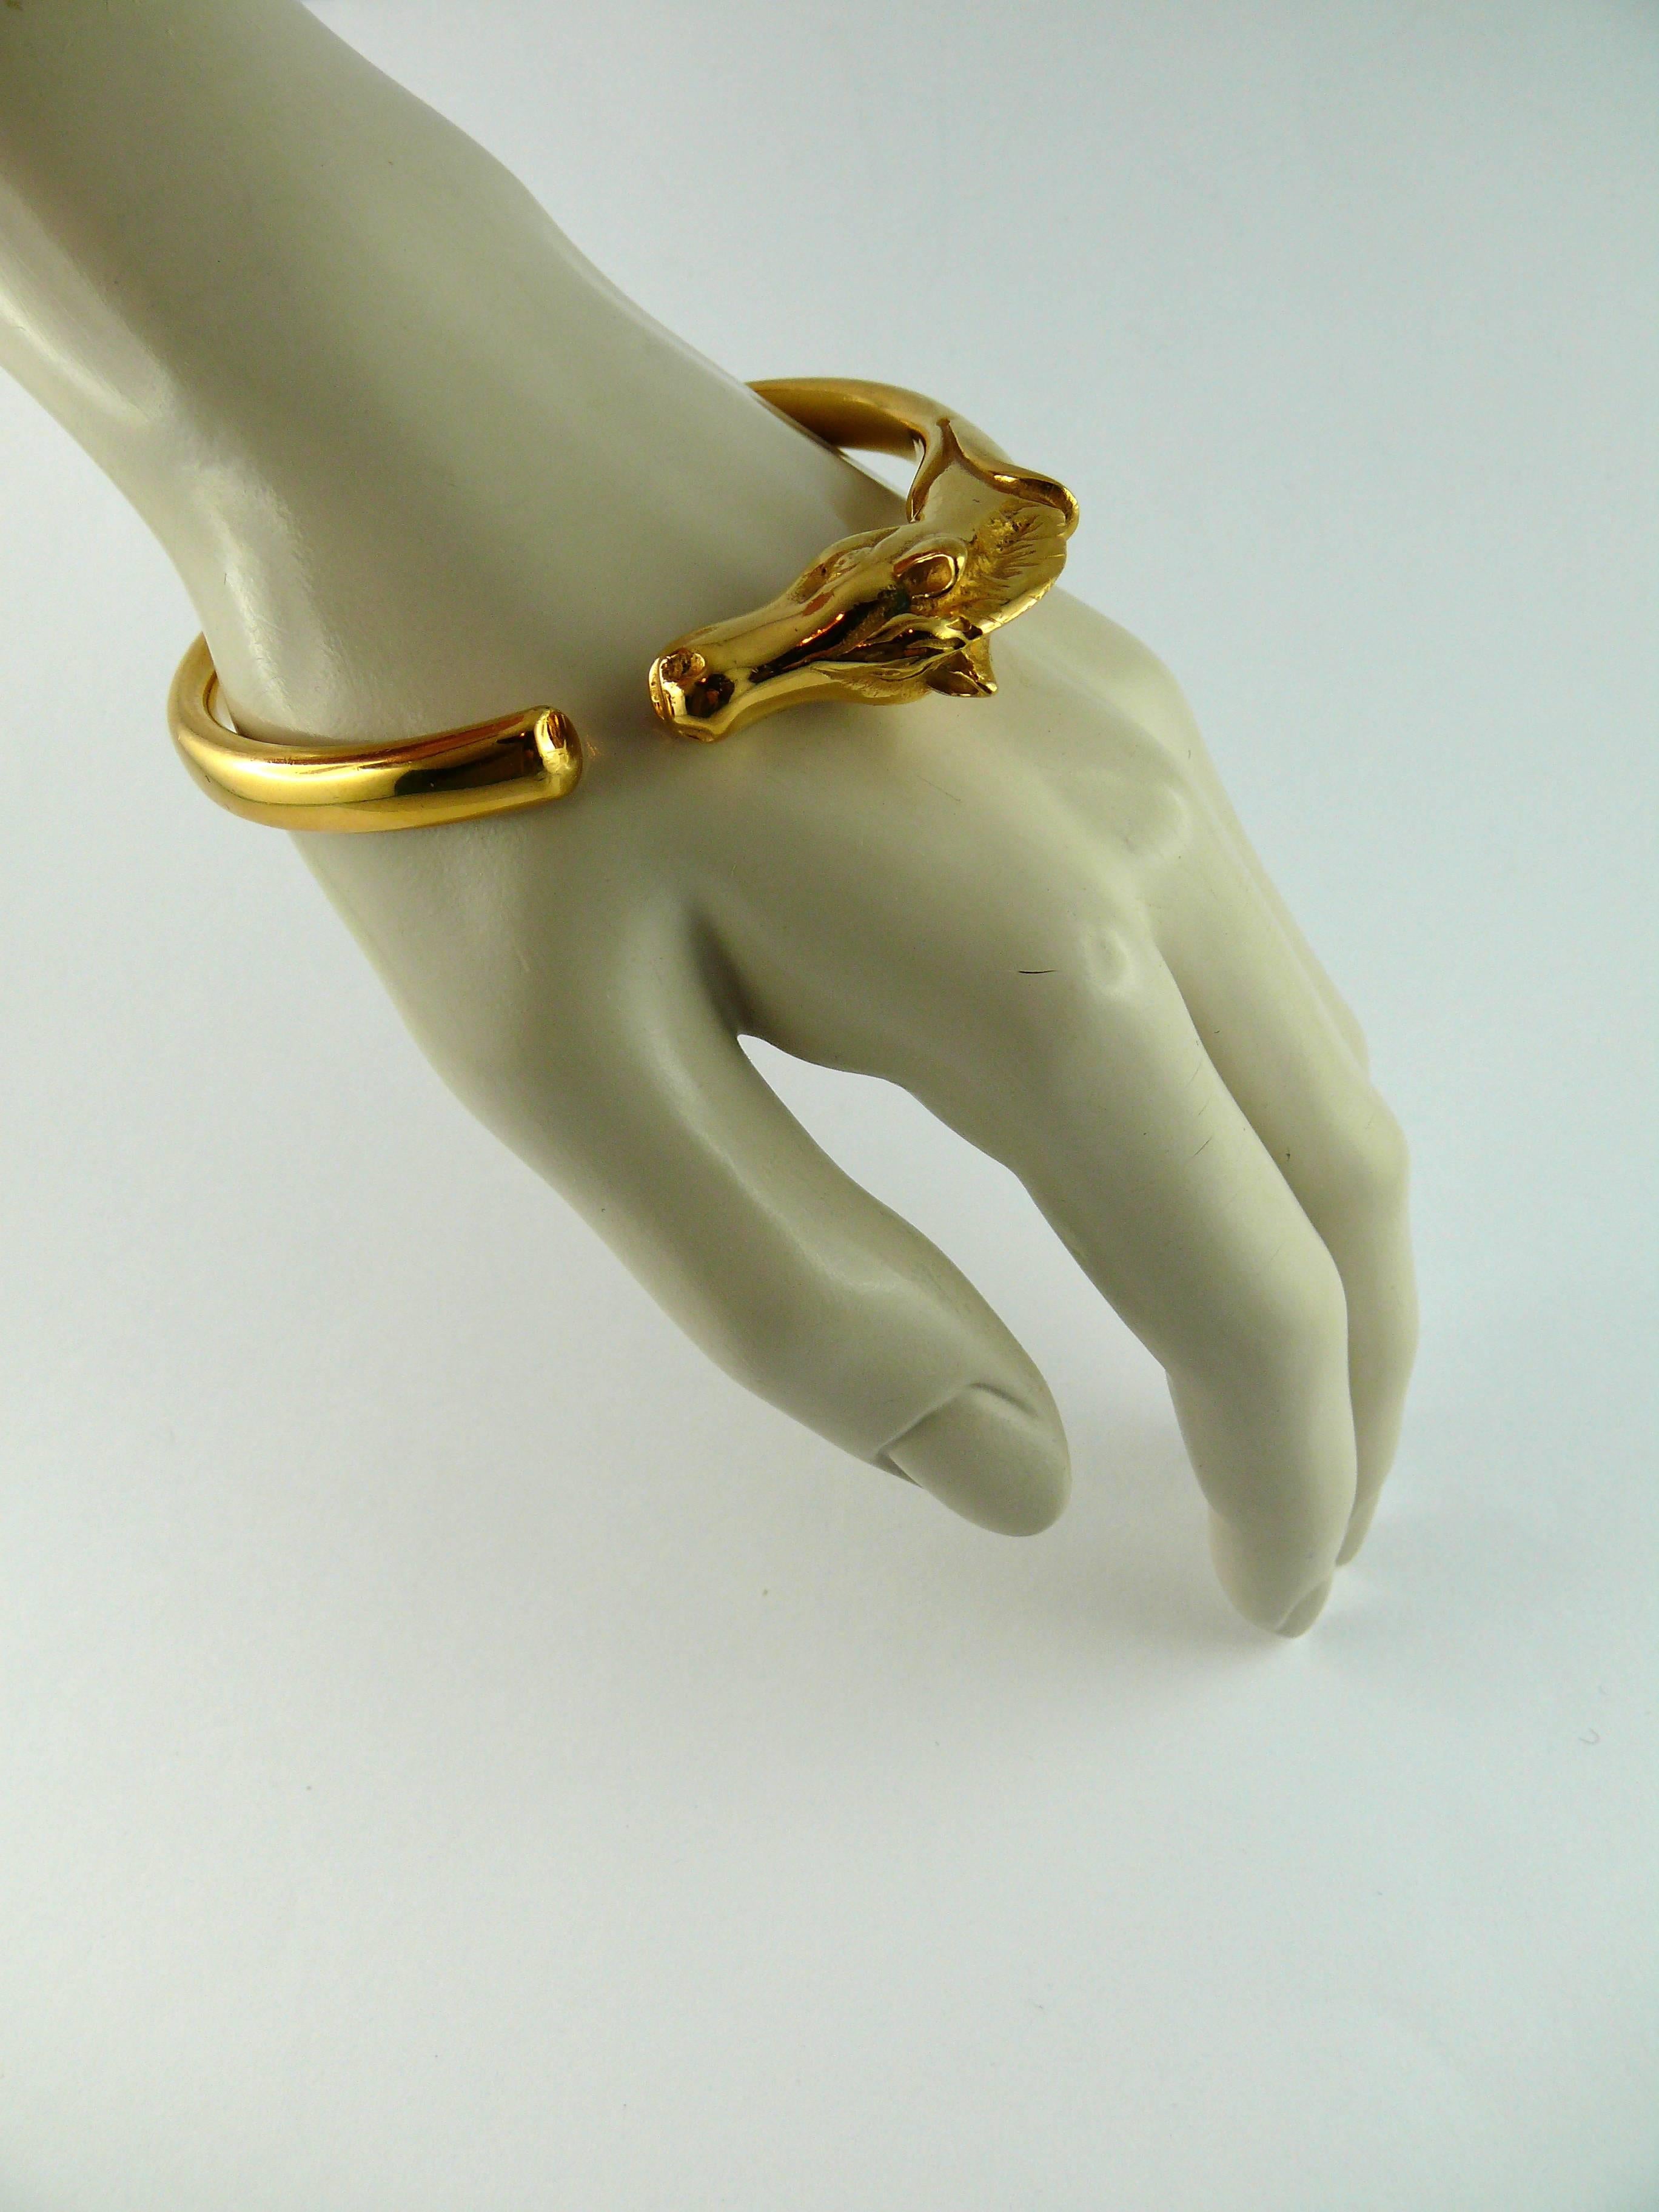 HERMES Paris vintage gold plated horse head bracelet bangle.

Marked HERMES Paris Made in France and maker's hallmark.

Indicative dimensions : total maximum diameter 7.3 cm (2.87 inches) / maximum inside diameter 6.4 cm (2.52